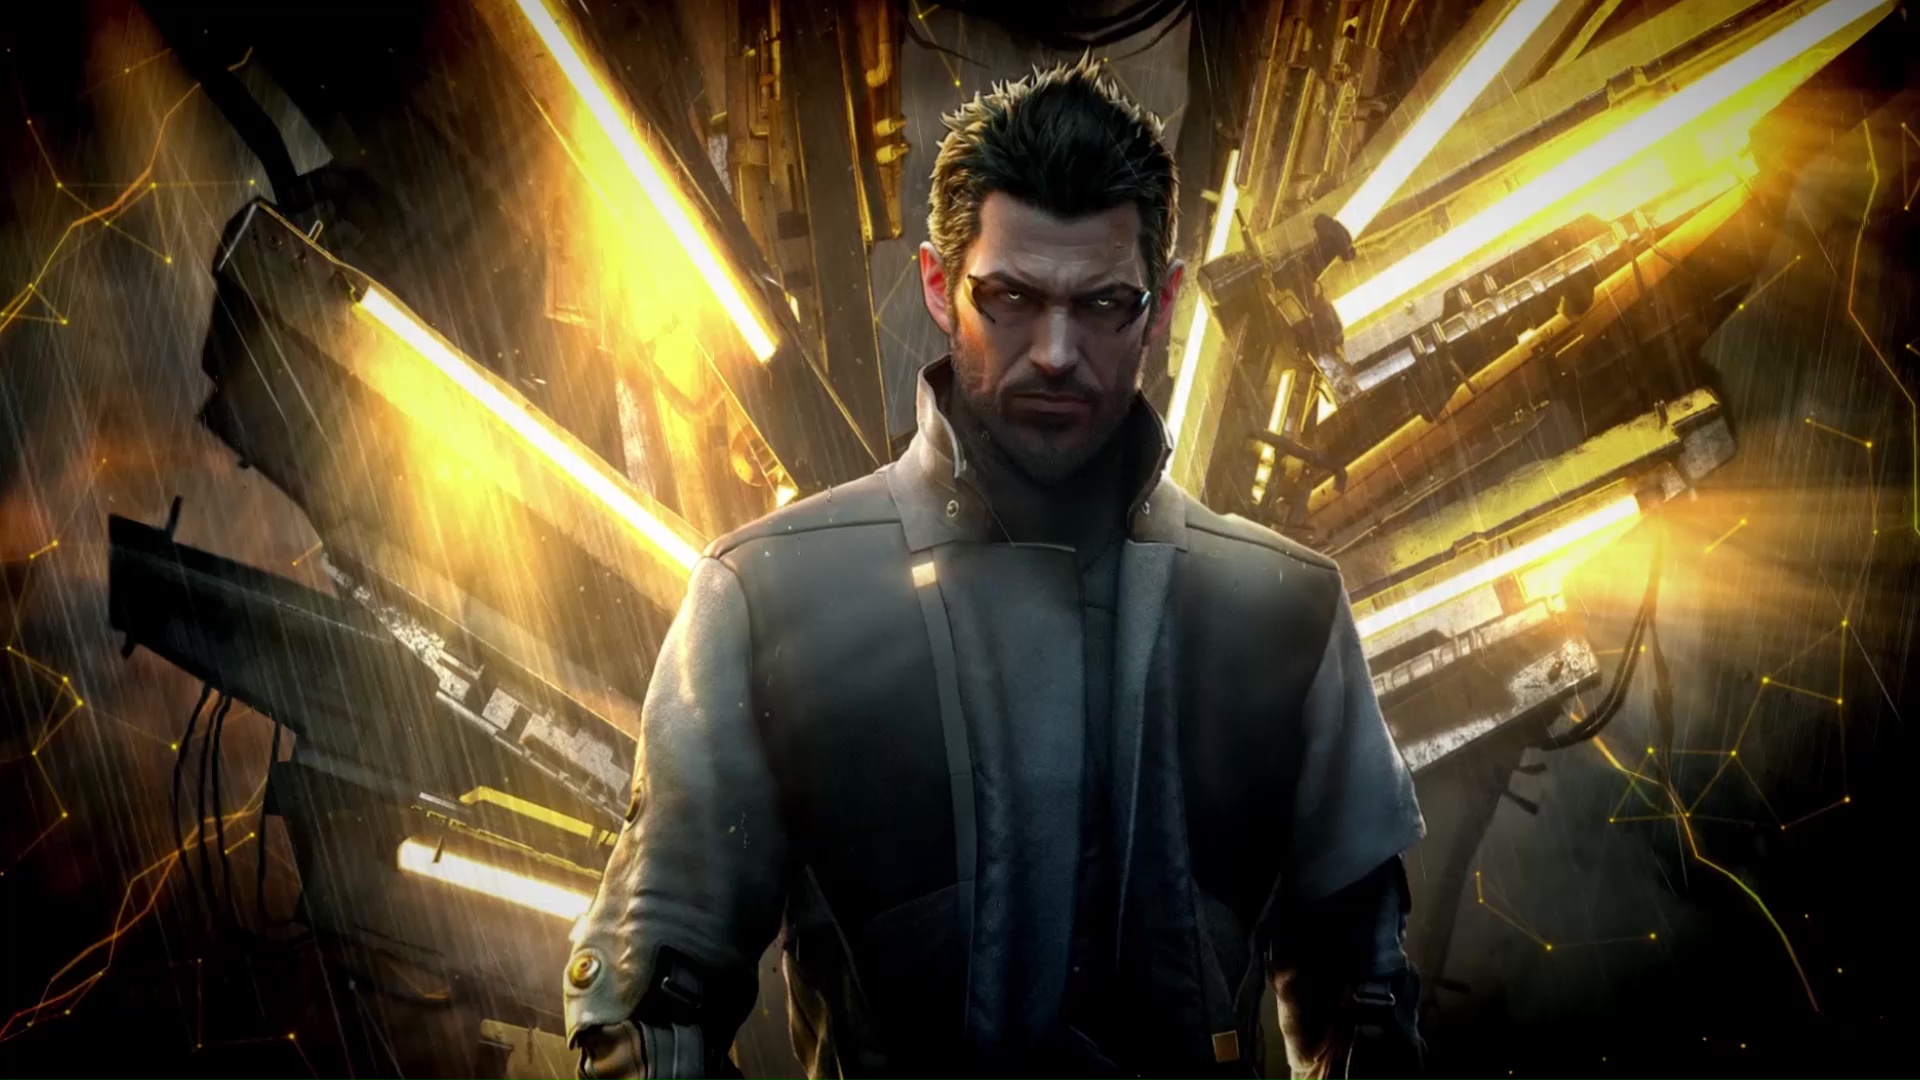 Deus Ex Human Revolution Download For Pc Windows 7, 8, 10